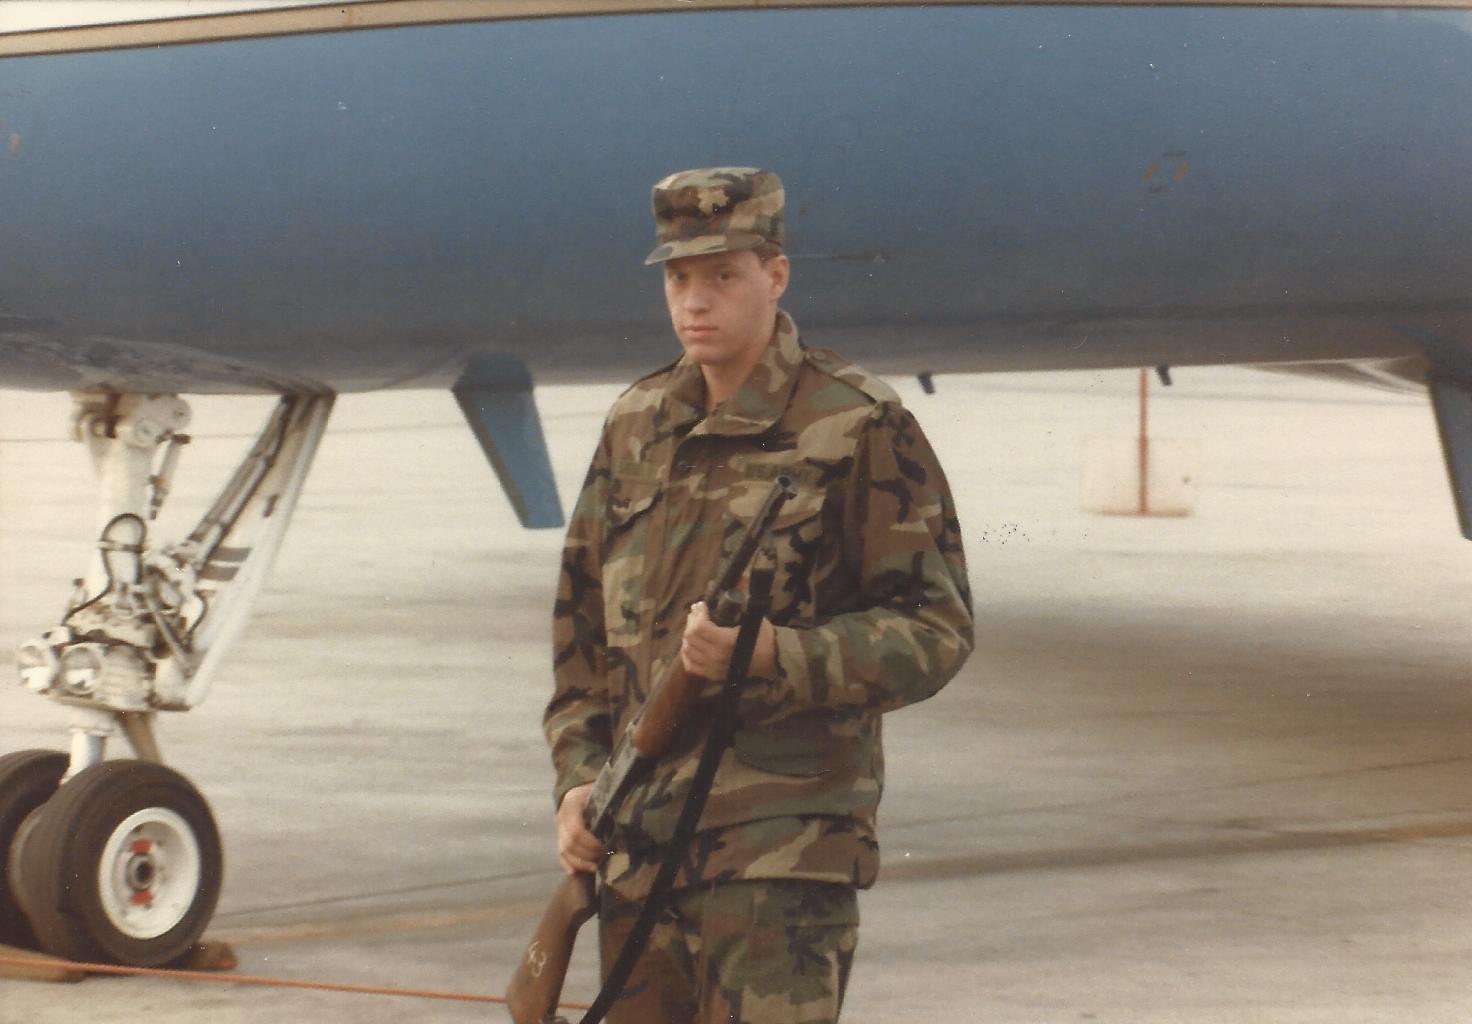 Michael shown guarding aircraft in Korea.